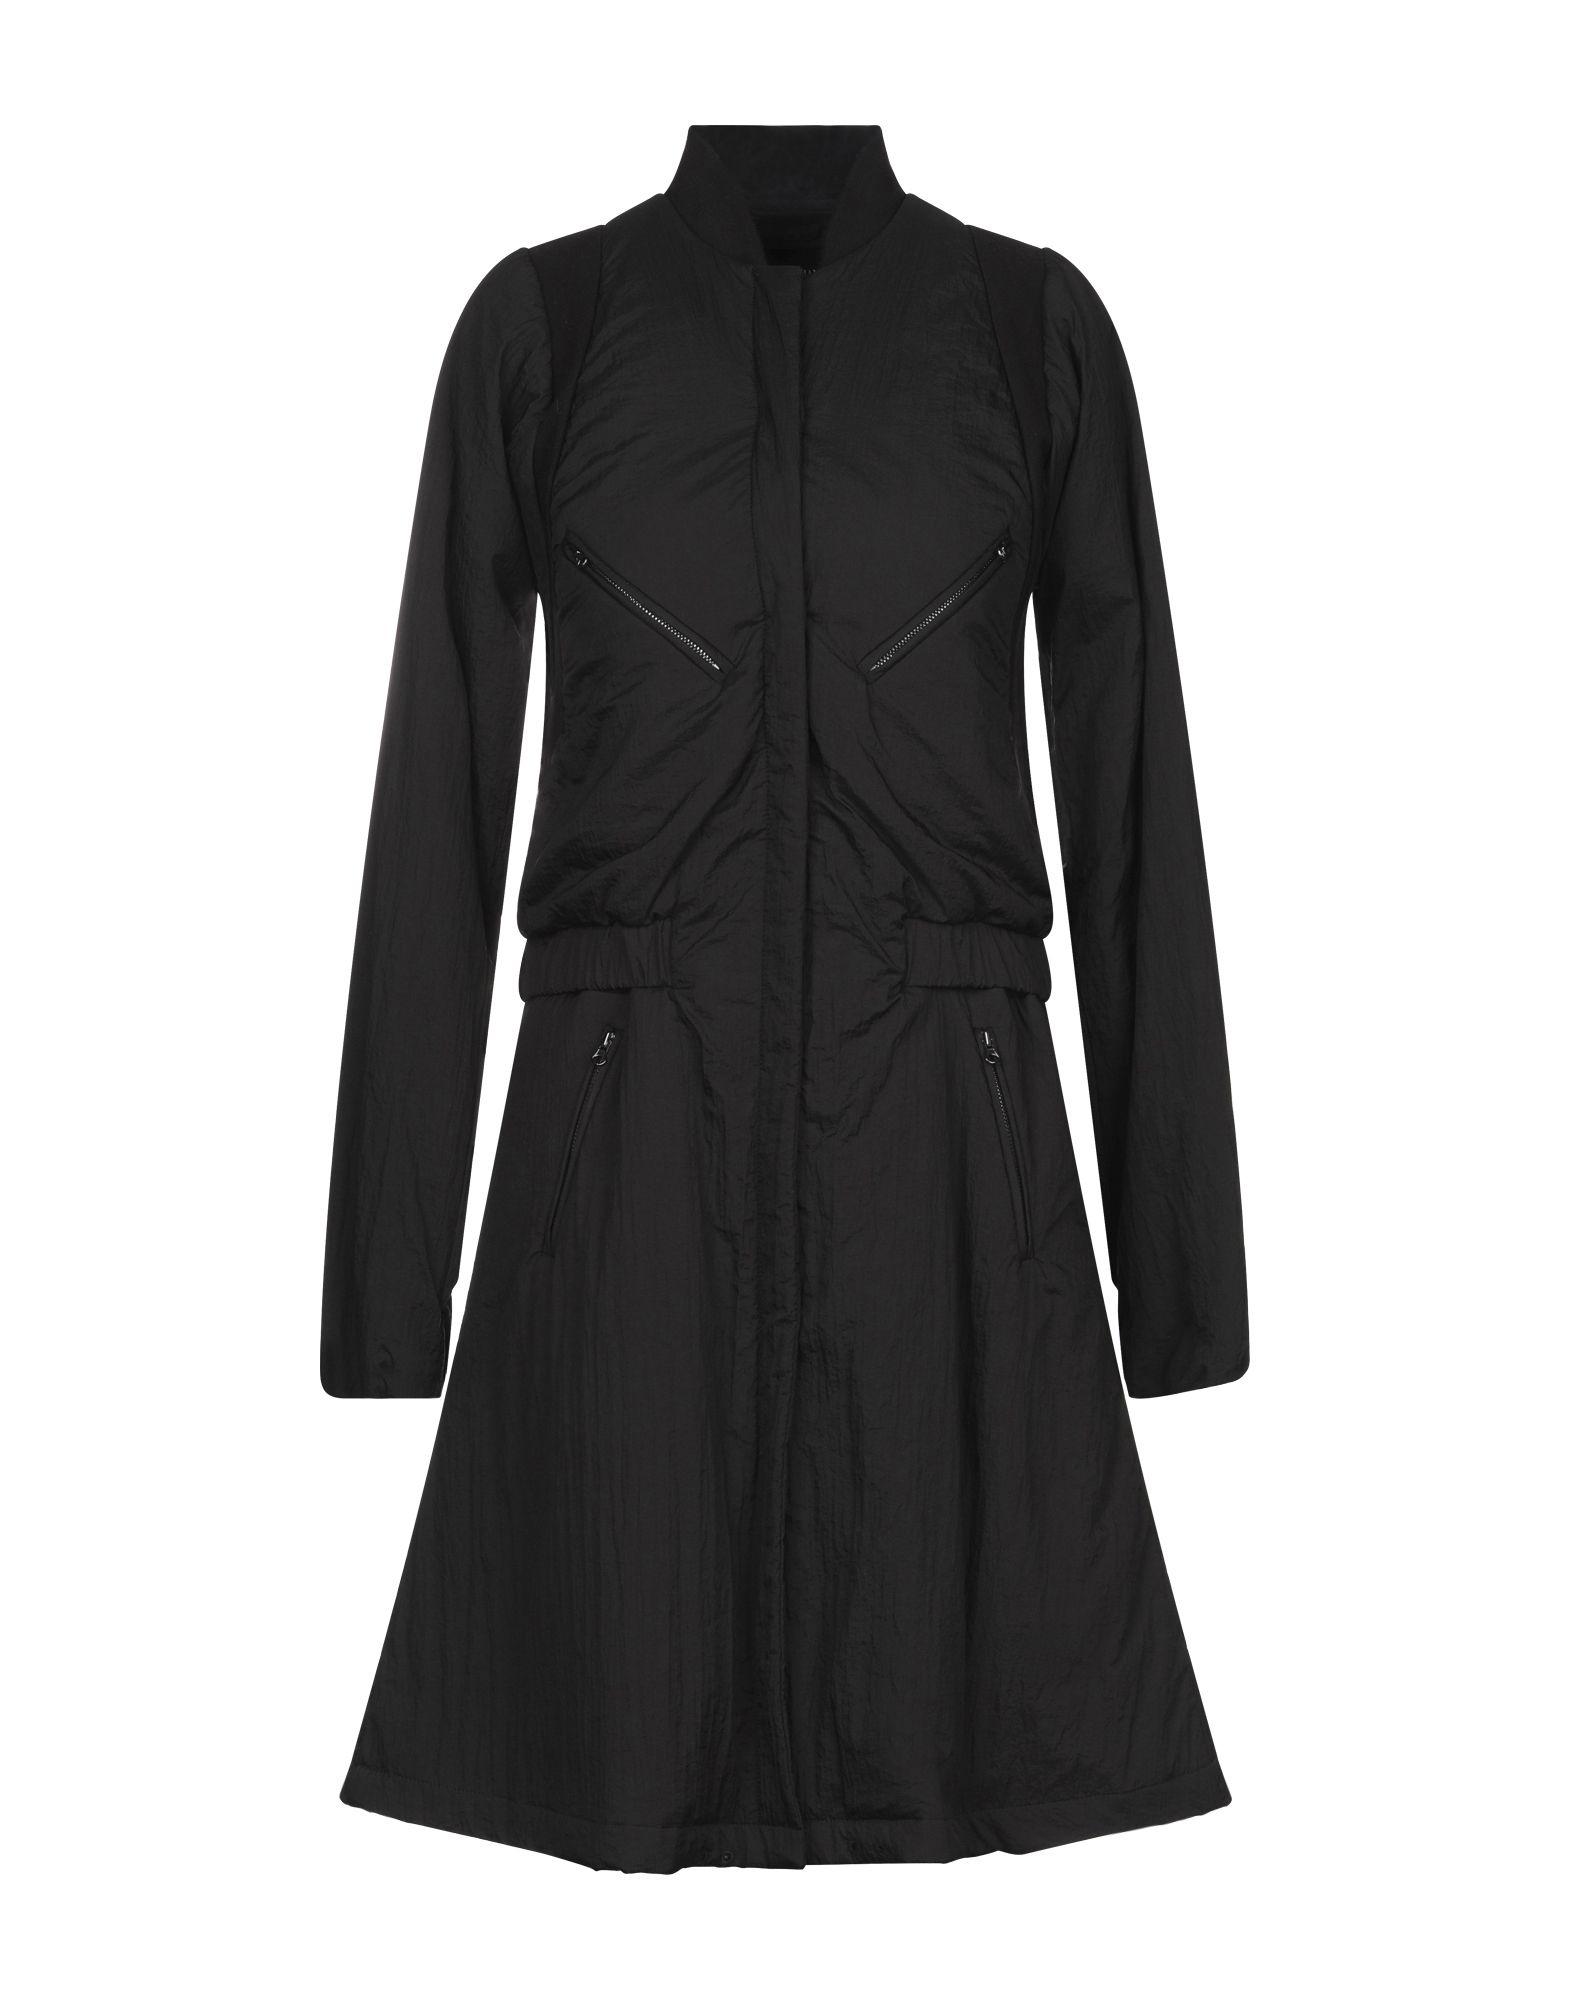 Emporio Armani Synthetic Overcoat in Black - Lyst